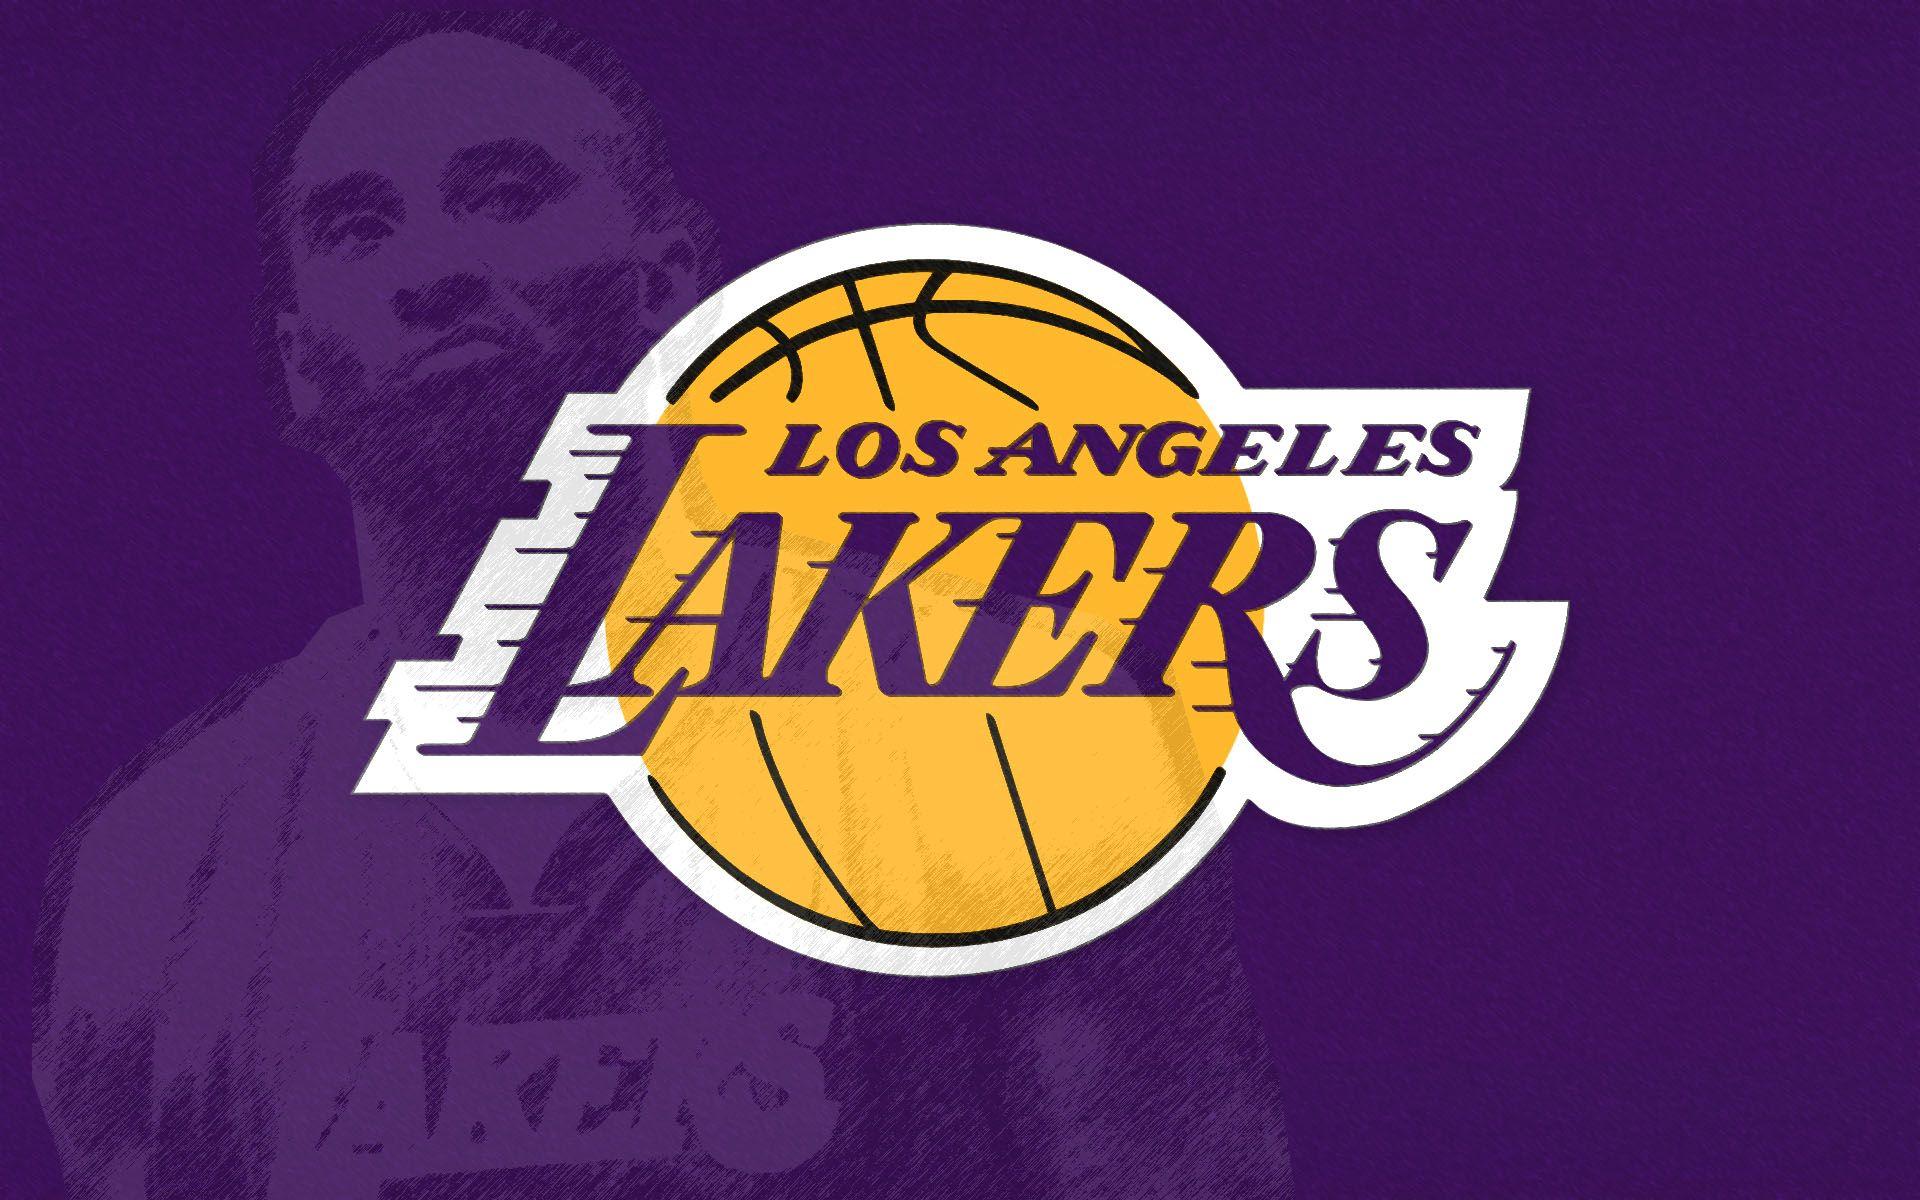 Los Angeles Lakers Wallpaper HD wallpaper search